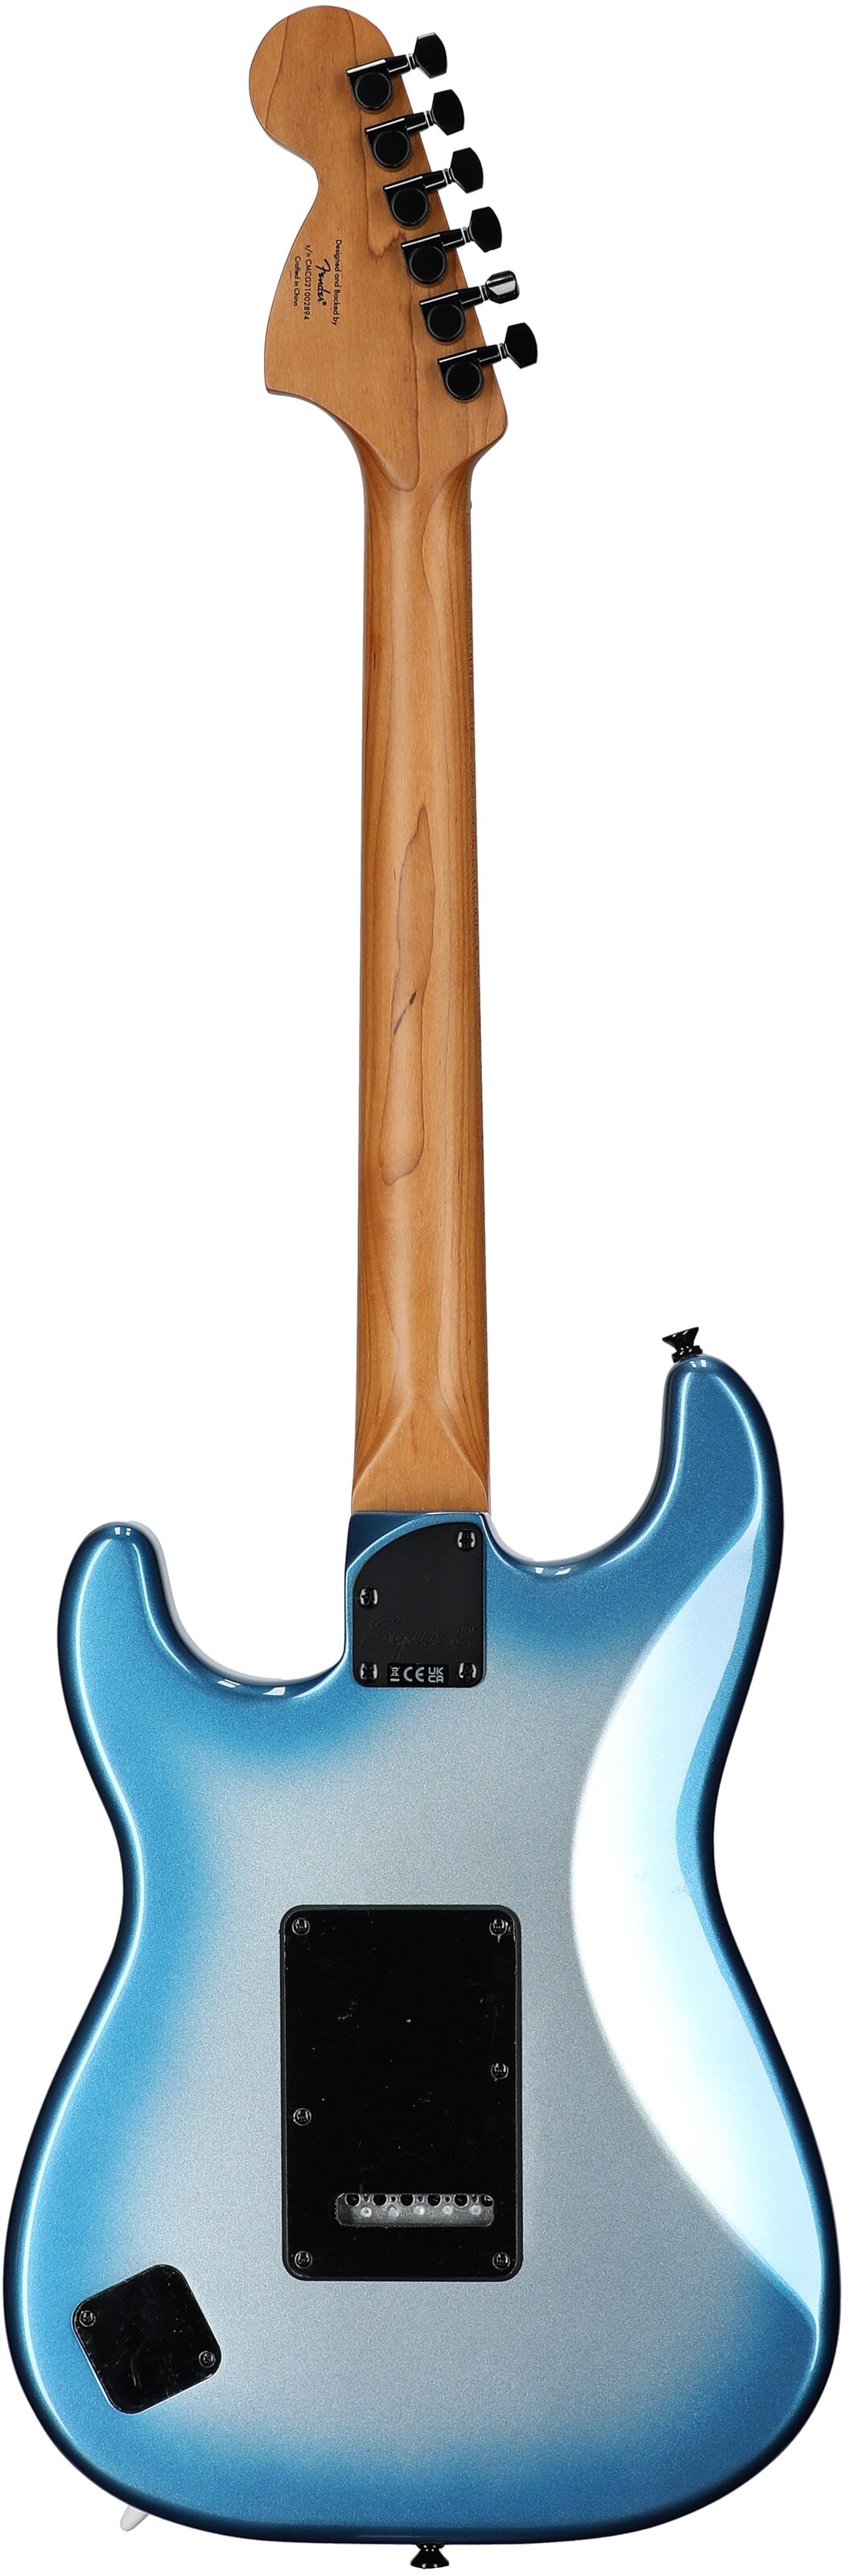 Squier Contemporary Stratocaster Special Electric Guitar